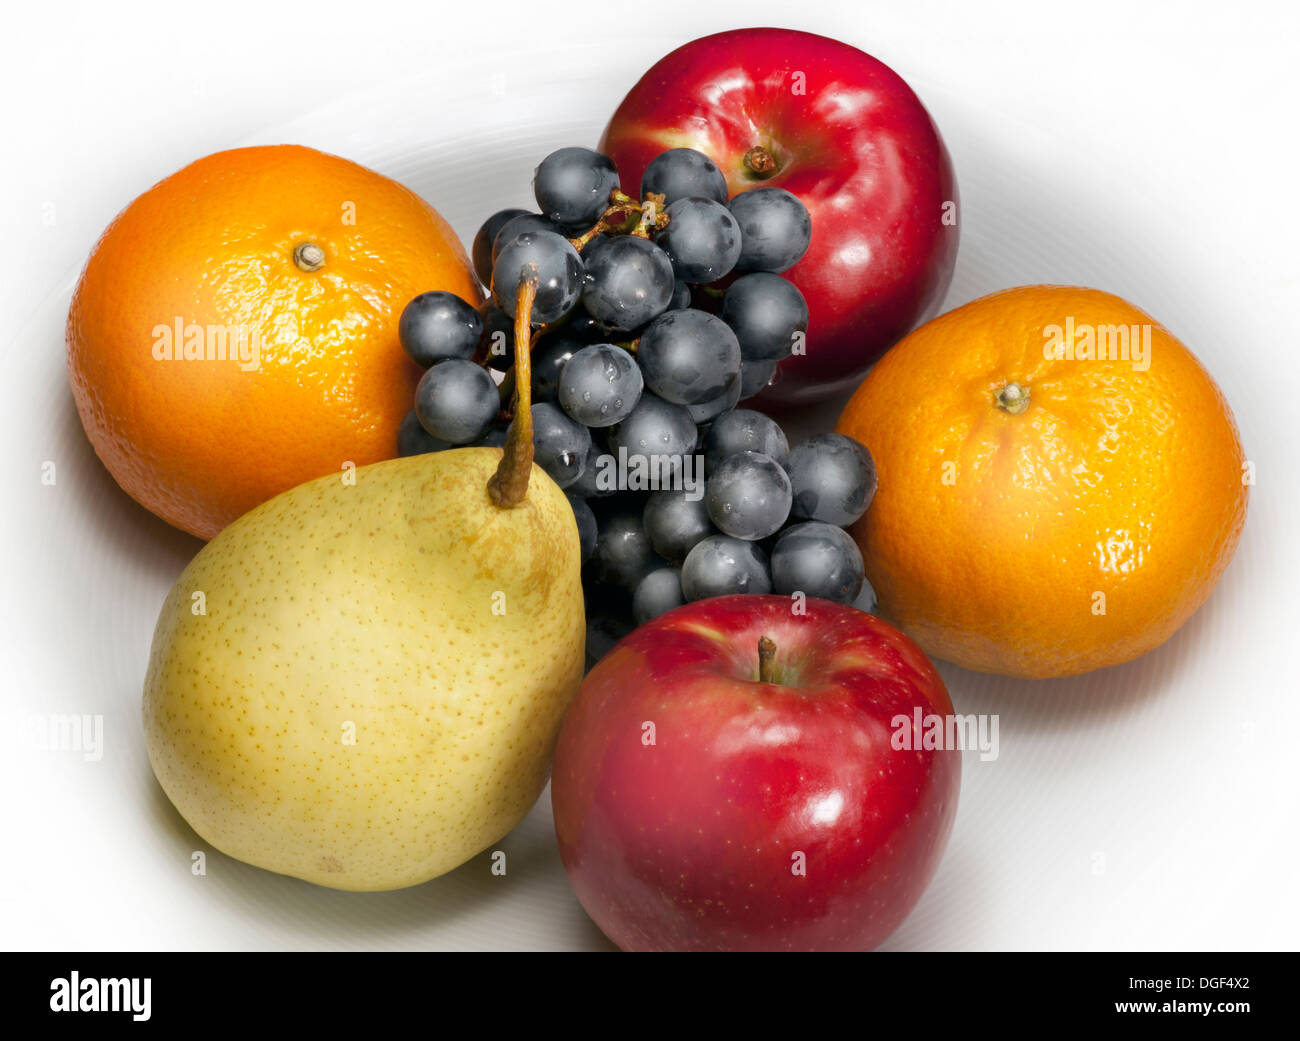 Fruit, apples, oranges, vine, pear, Stock Photo